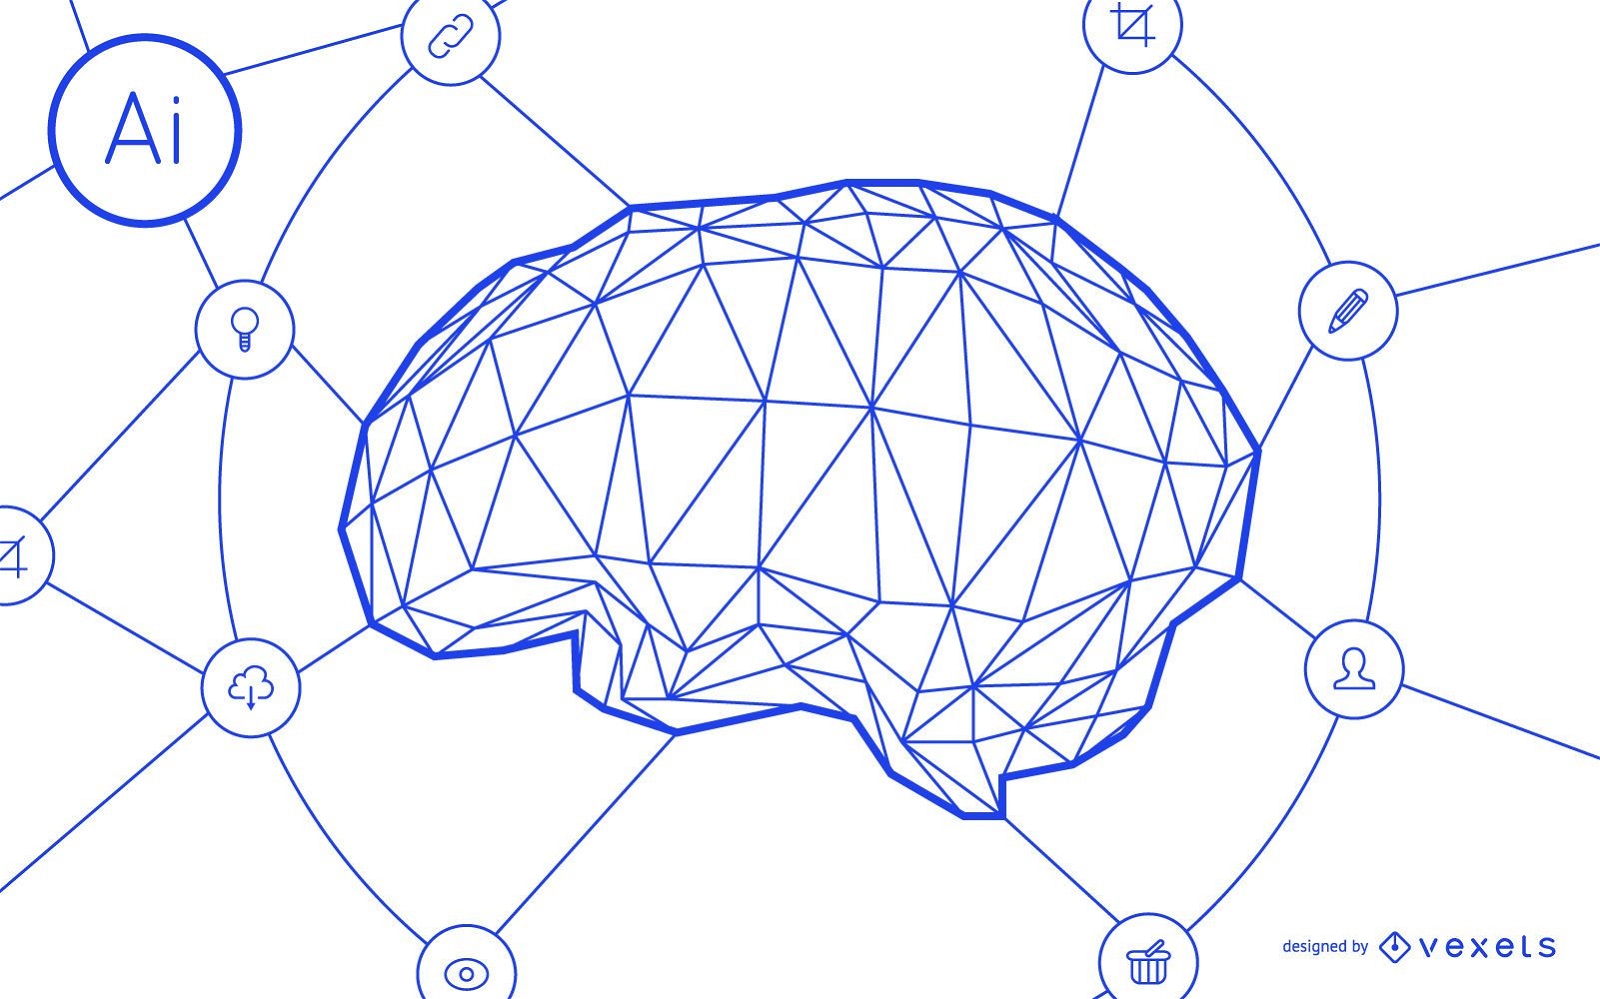 Projeto de rede cerebral de intelig?ncia artificial